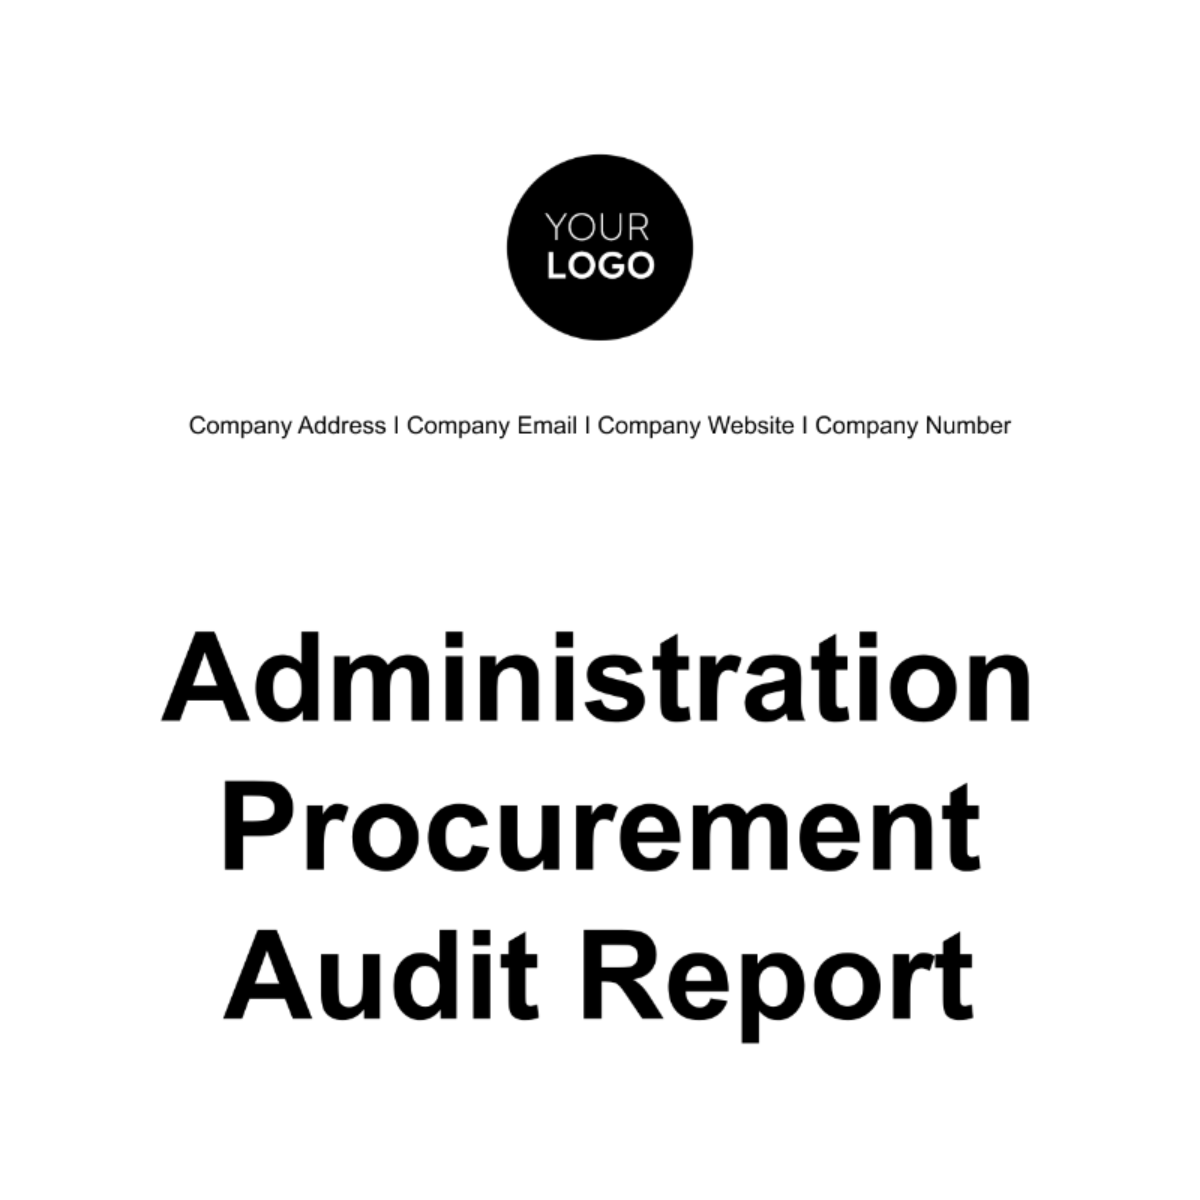 Administration Procurement Audit Report Template